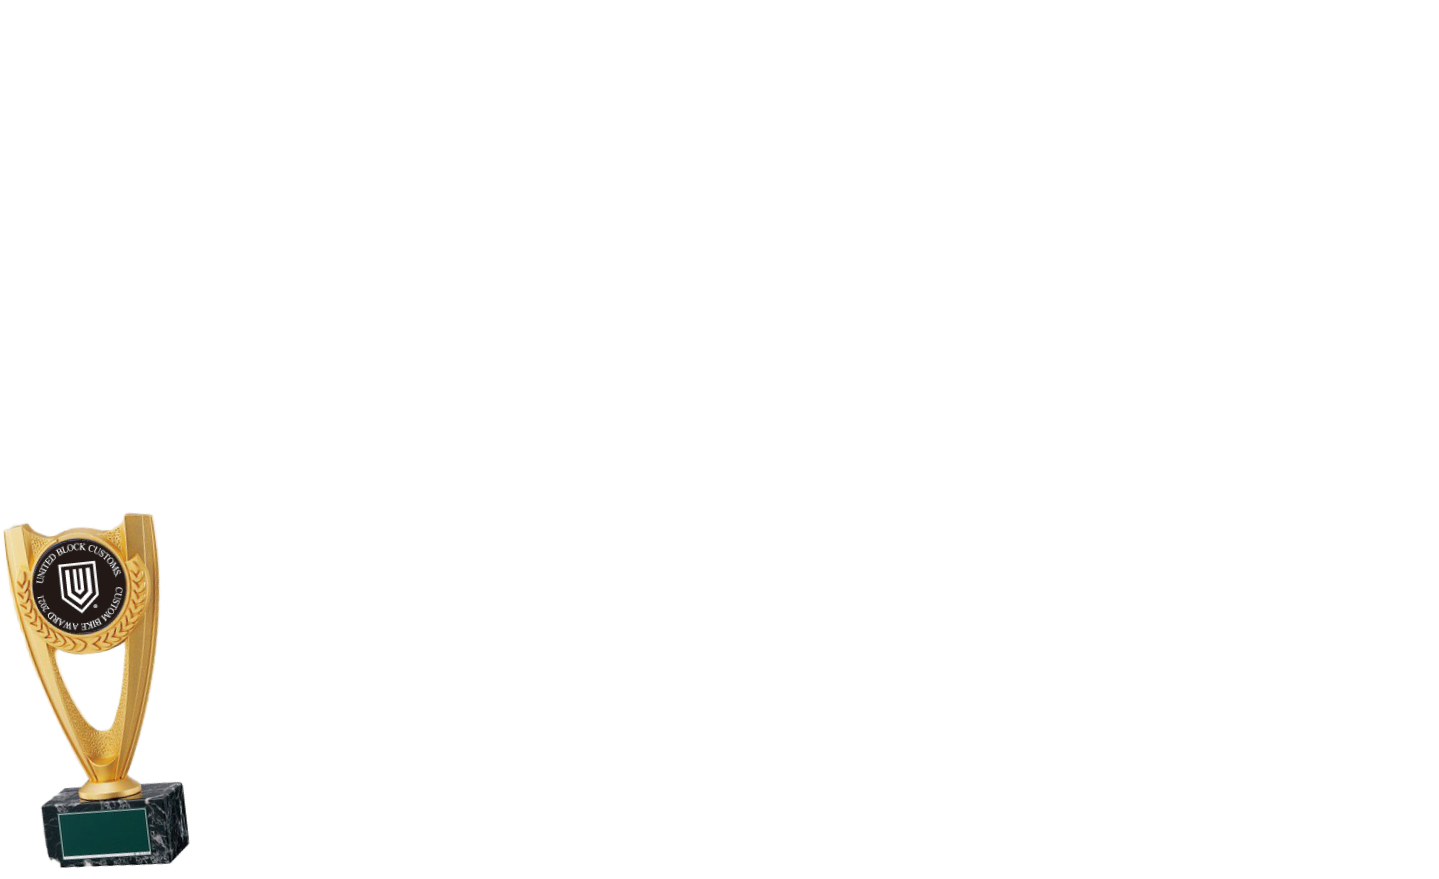 Sky lounge 2022CUSTOM BIKE AWARD